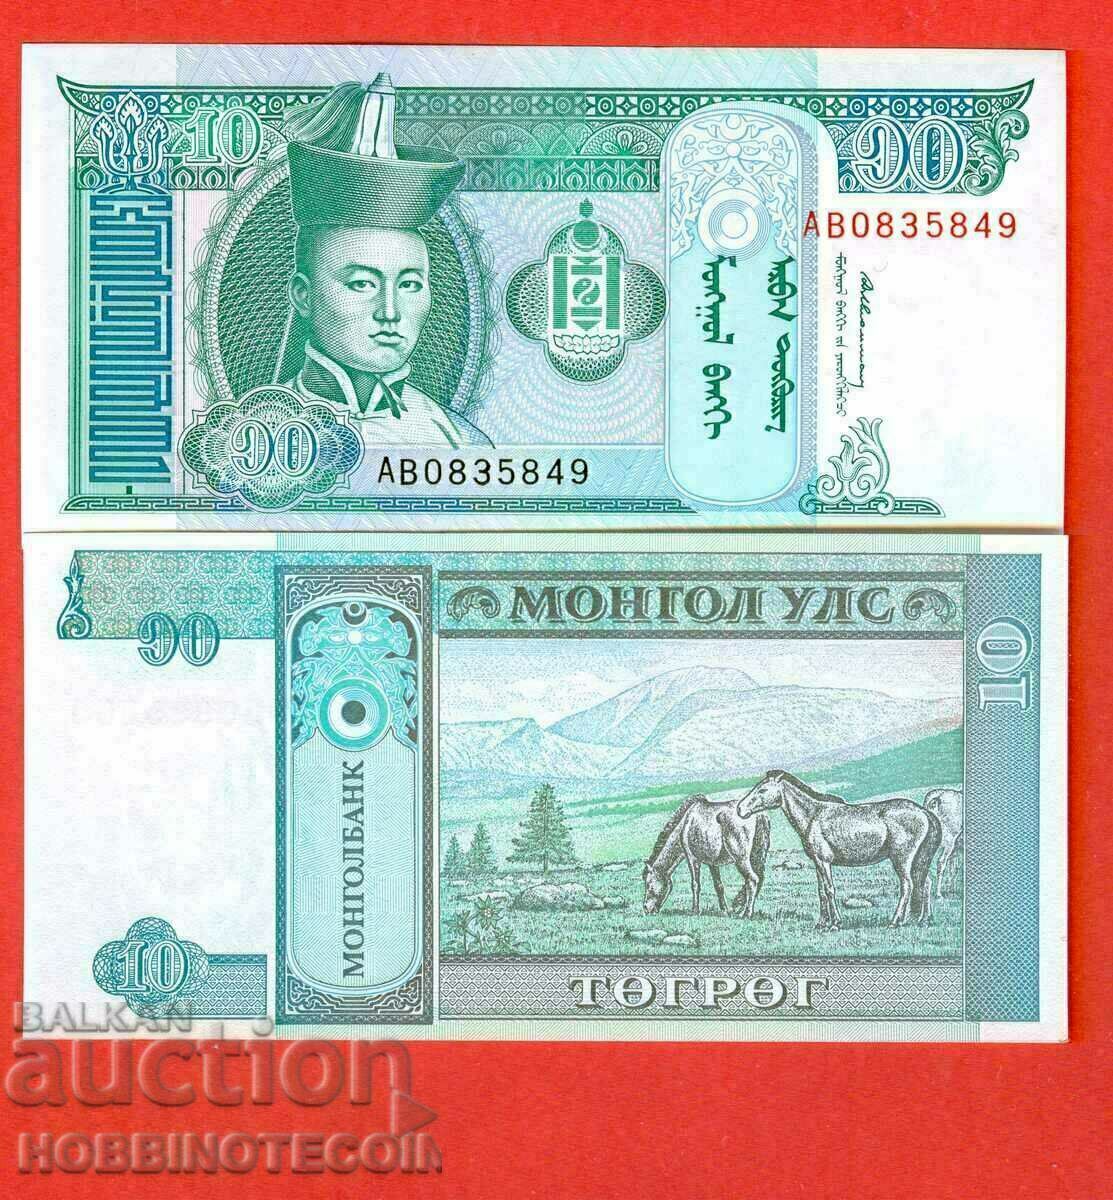 MONGOLIA MONGOLIA 10 Tugrik issue issue 1993 NEW UNC